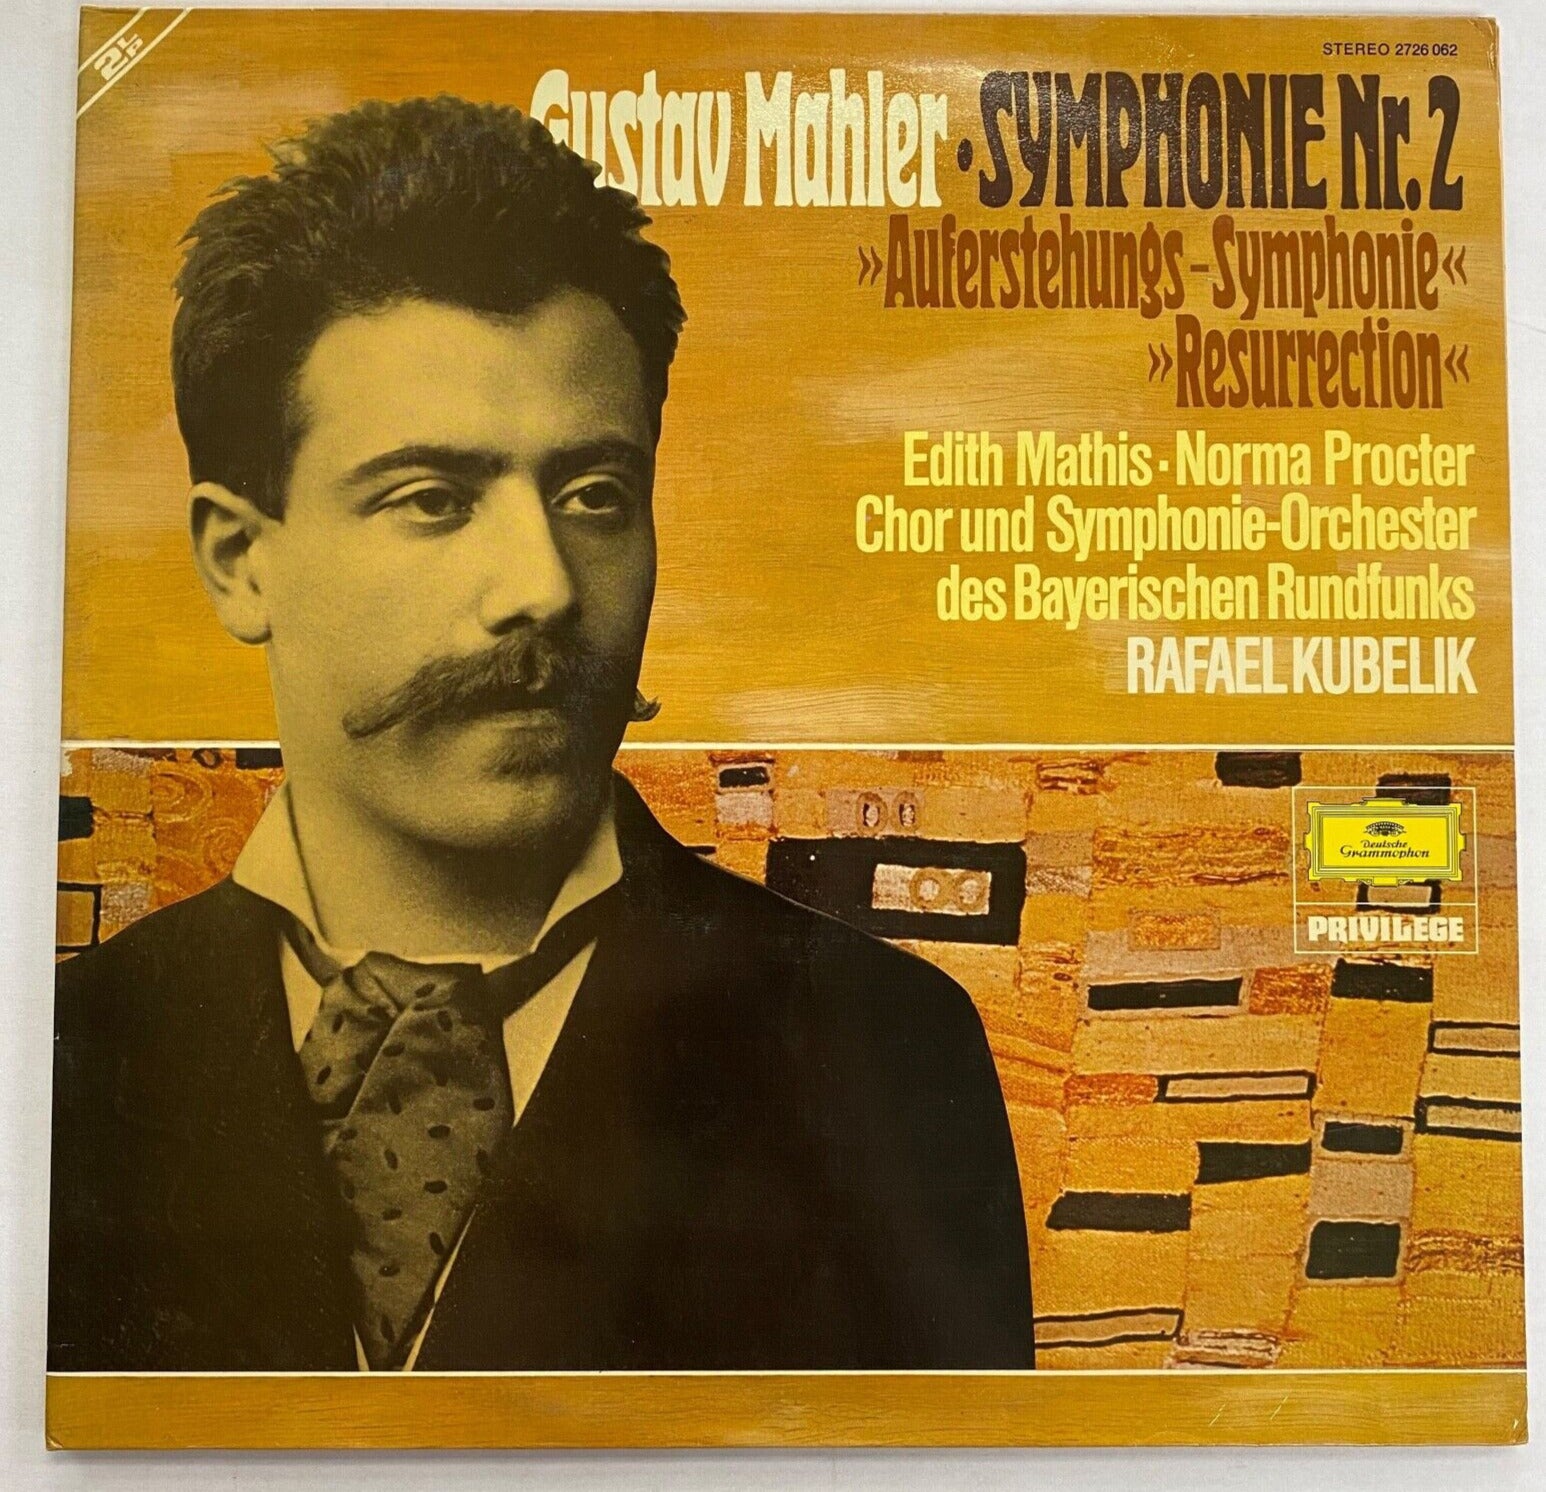 GUSTAV MAHLER SYMPHONIE NR. 2 LP